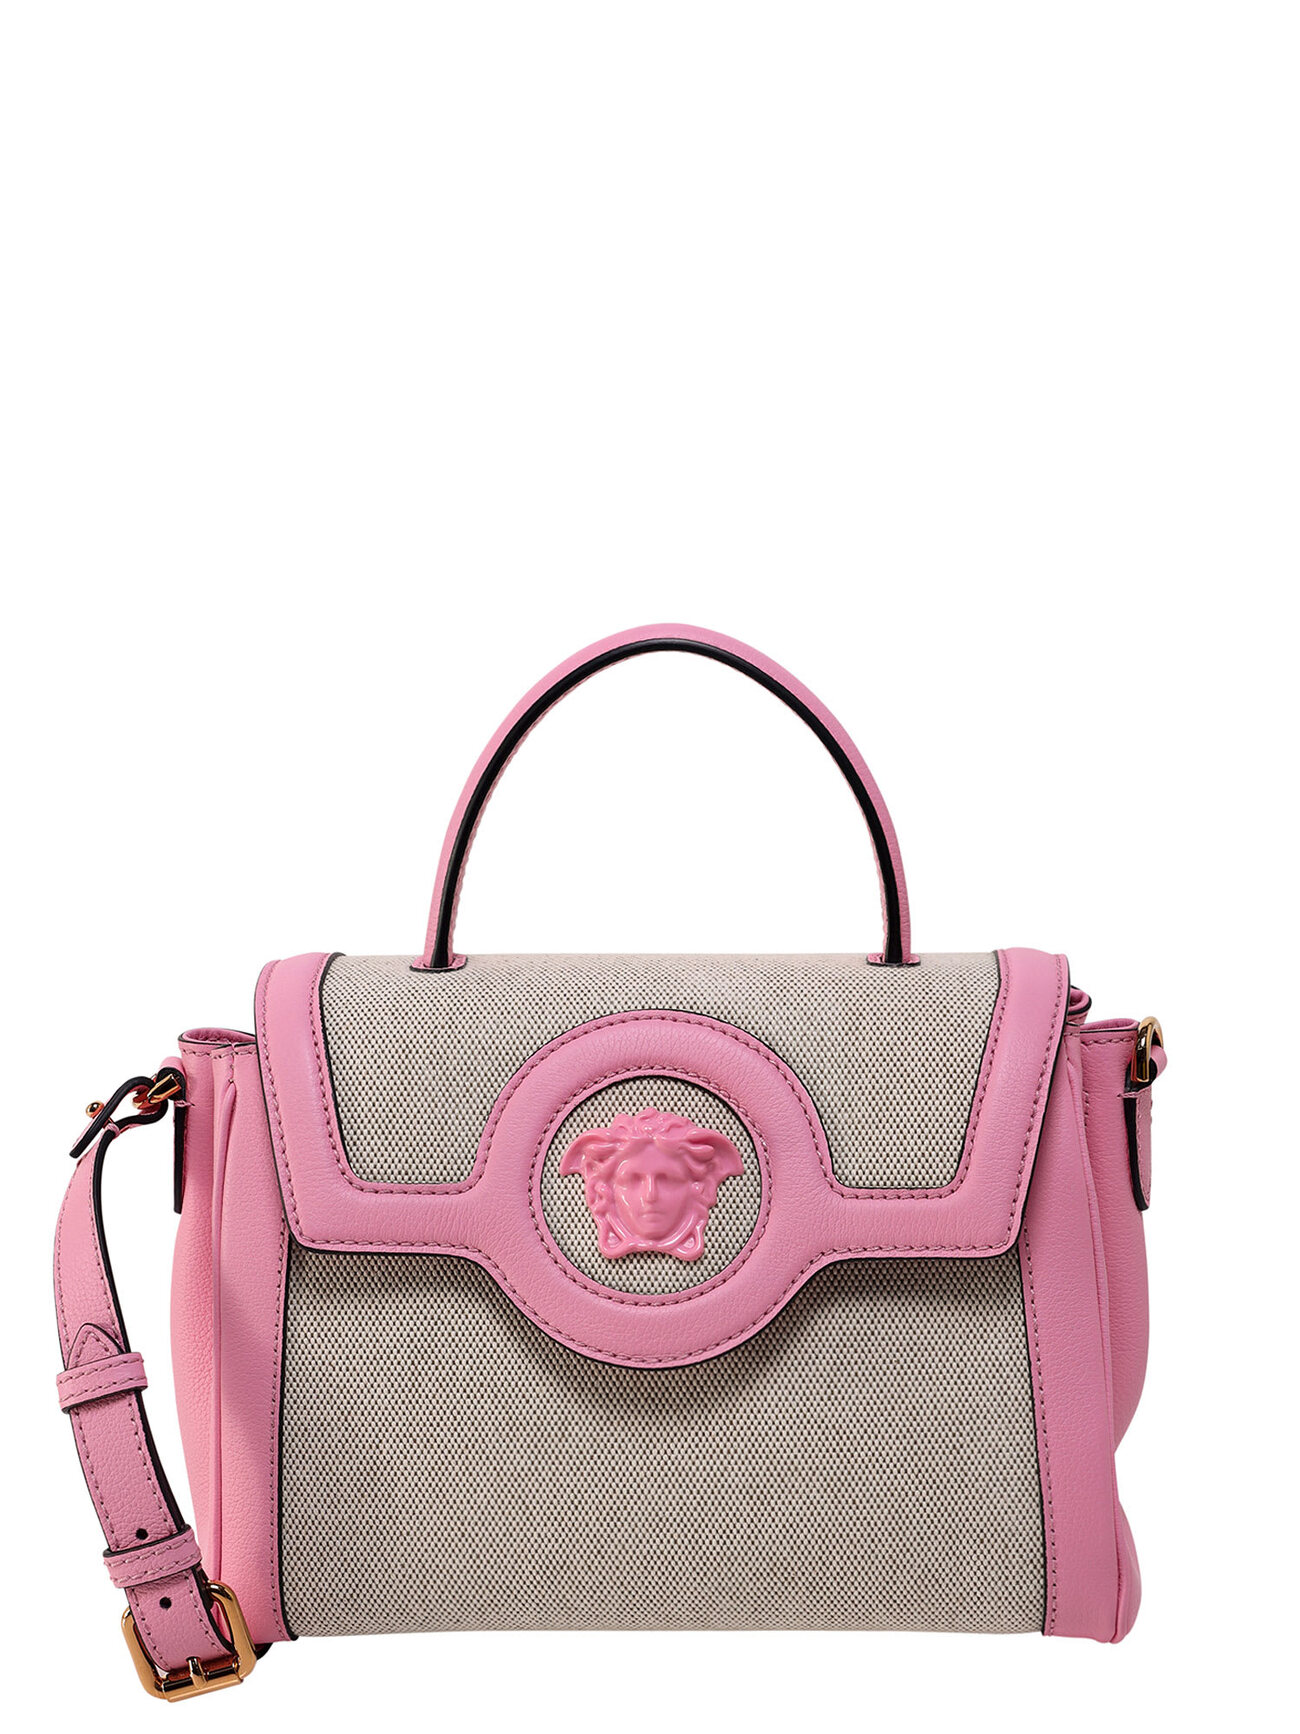 Versace La Medusa Handbag in pink